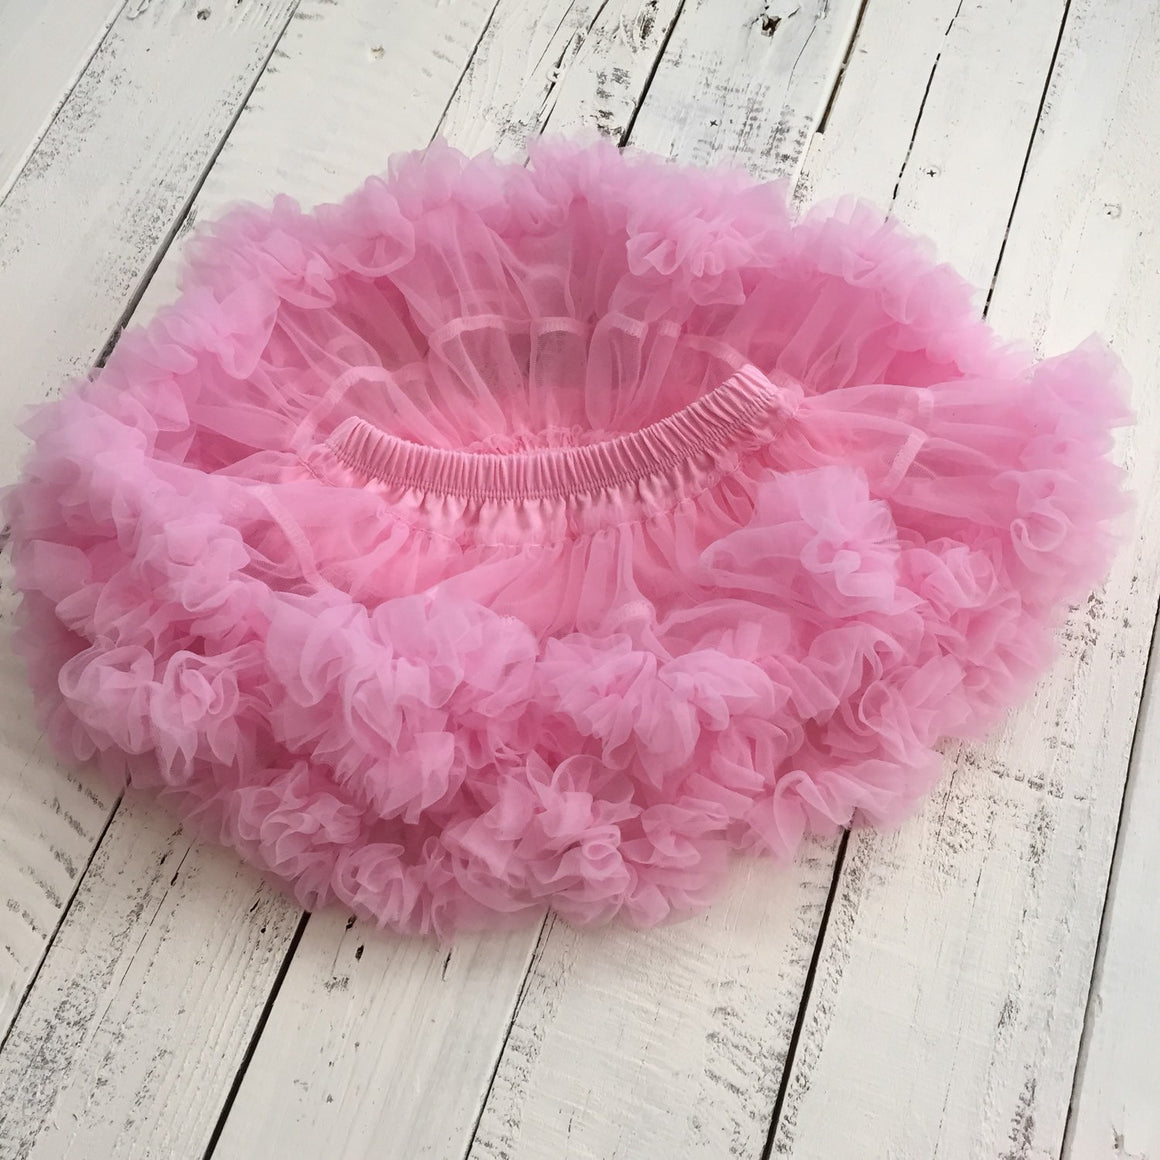 Light Pink - Pettiskirt - Tutu Skirt - Ruffle Bottom Bloomers - HoneyLoveBoutique